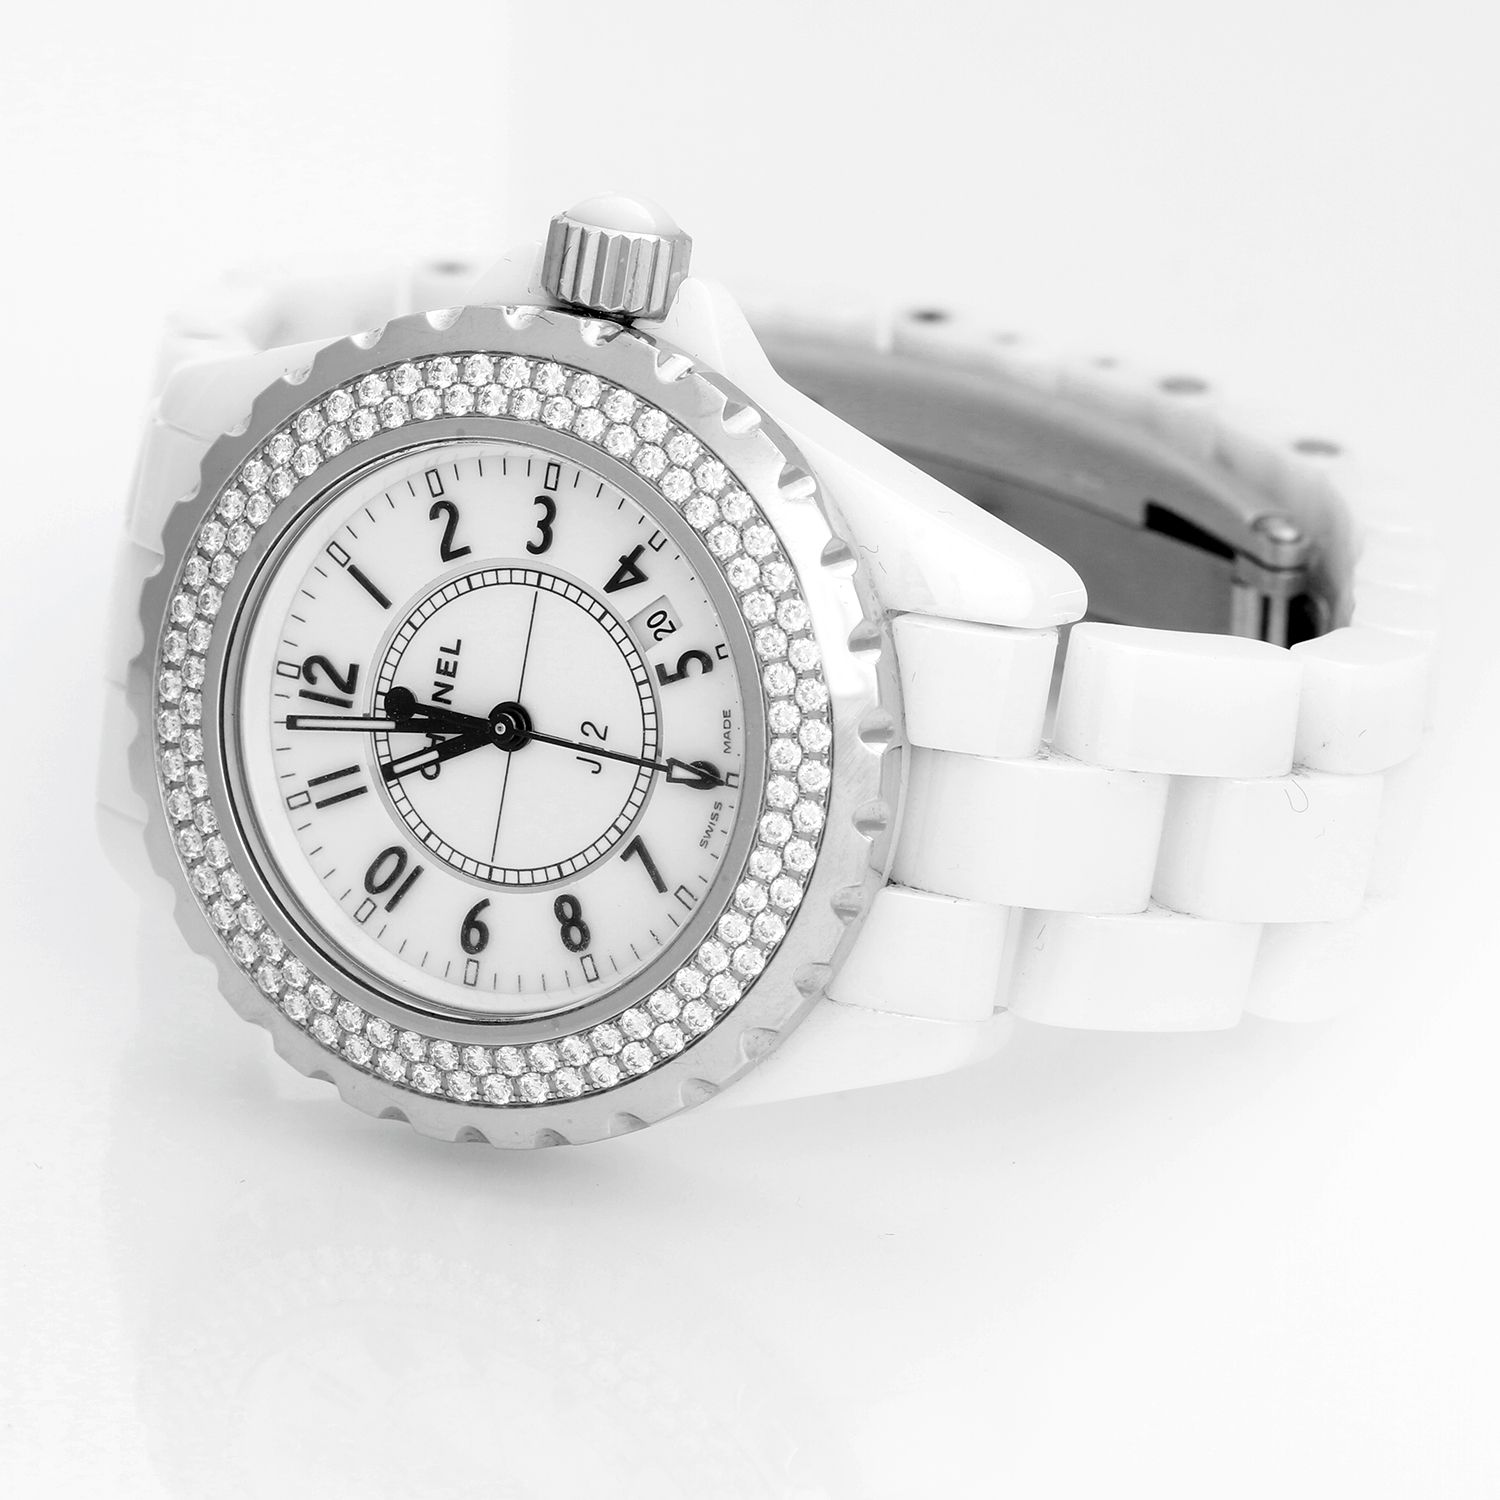 Chanel J12 White Ceramic 33mm Diamond Watch H0967